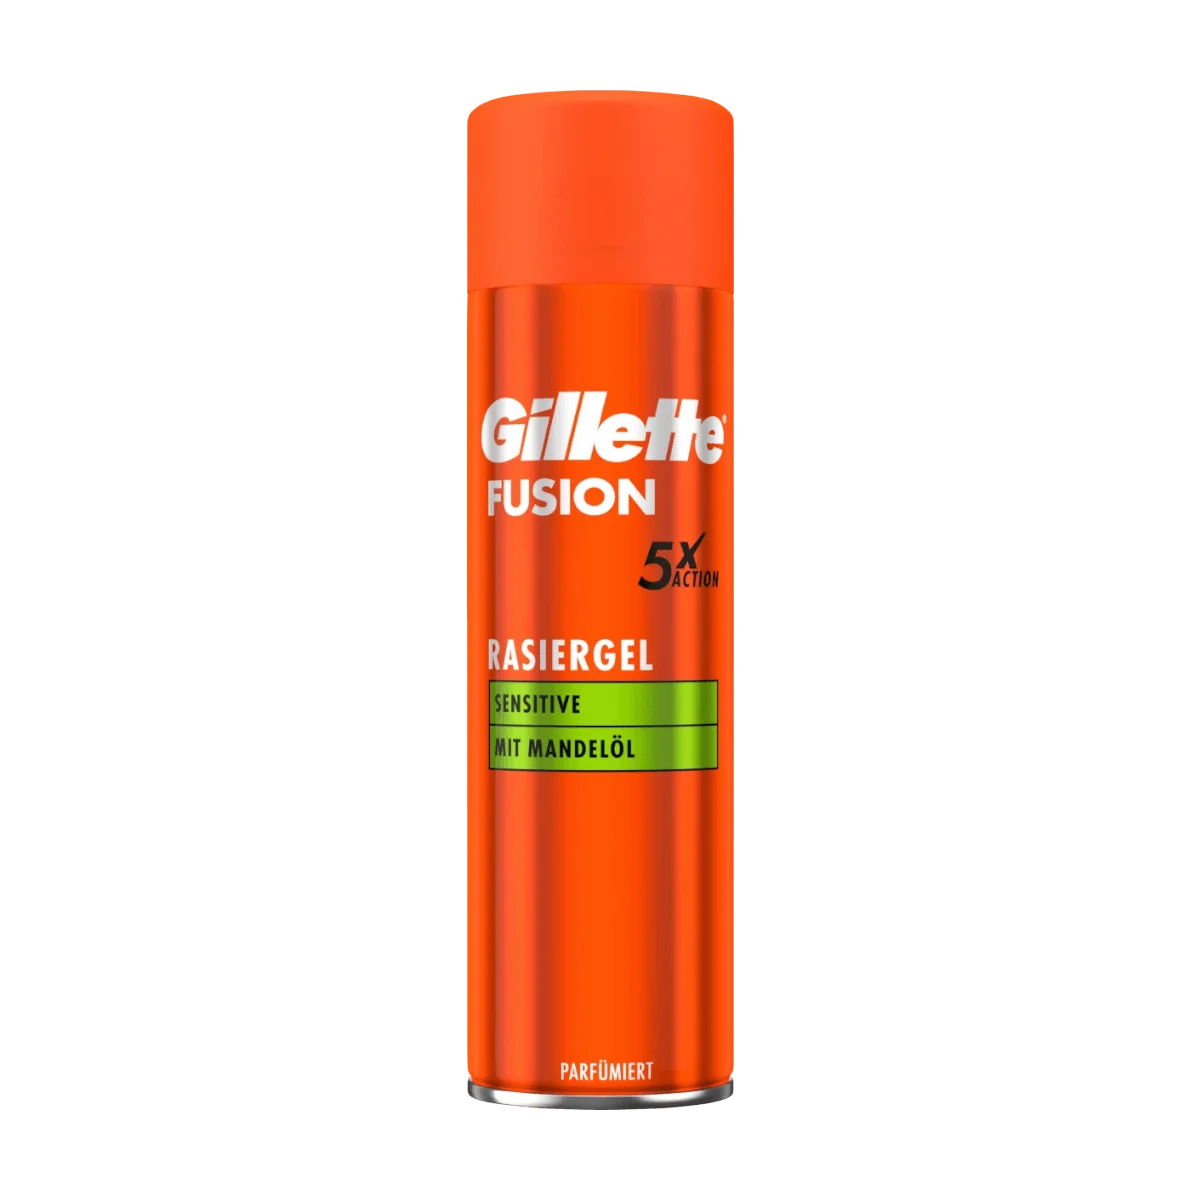 Gillette Rasiergel Fusion5 Sensitive, 200 ml